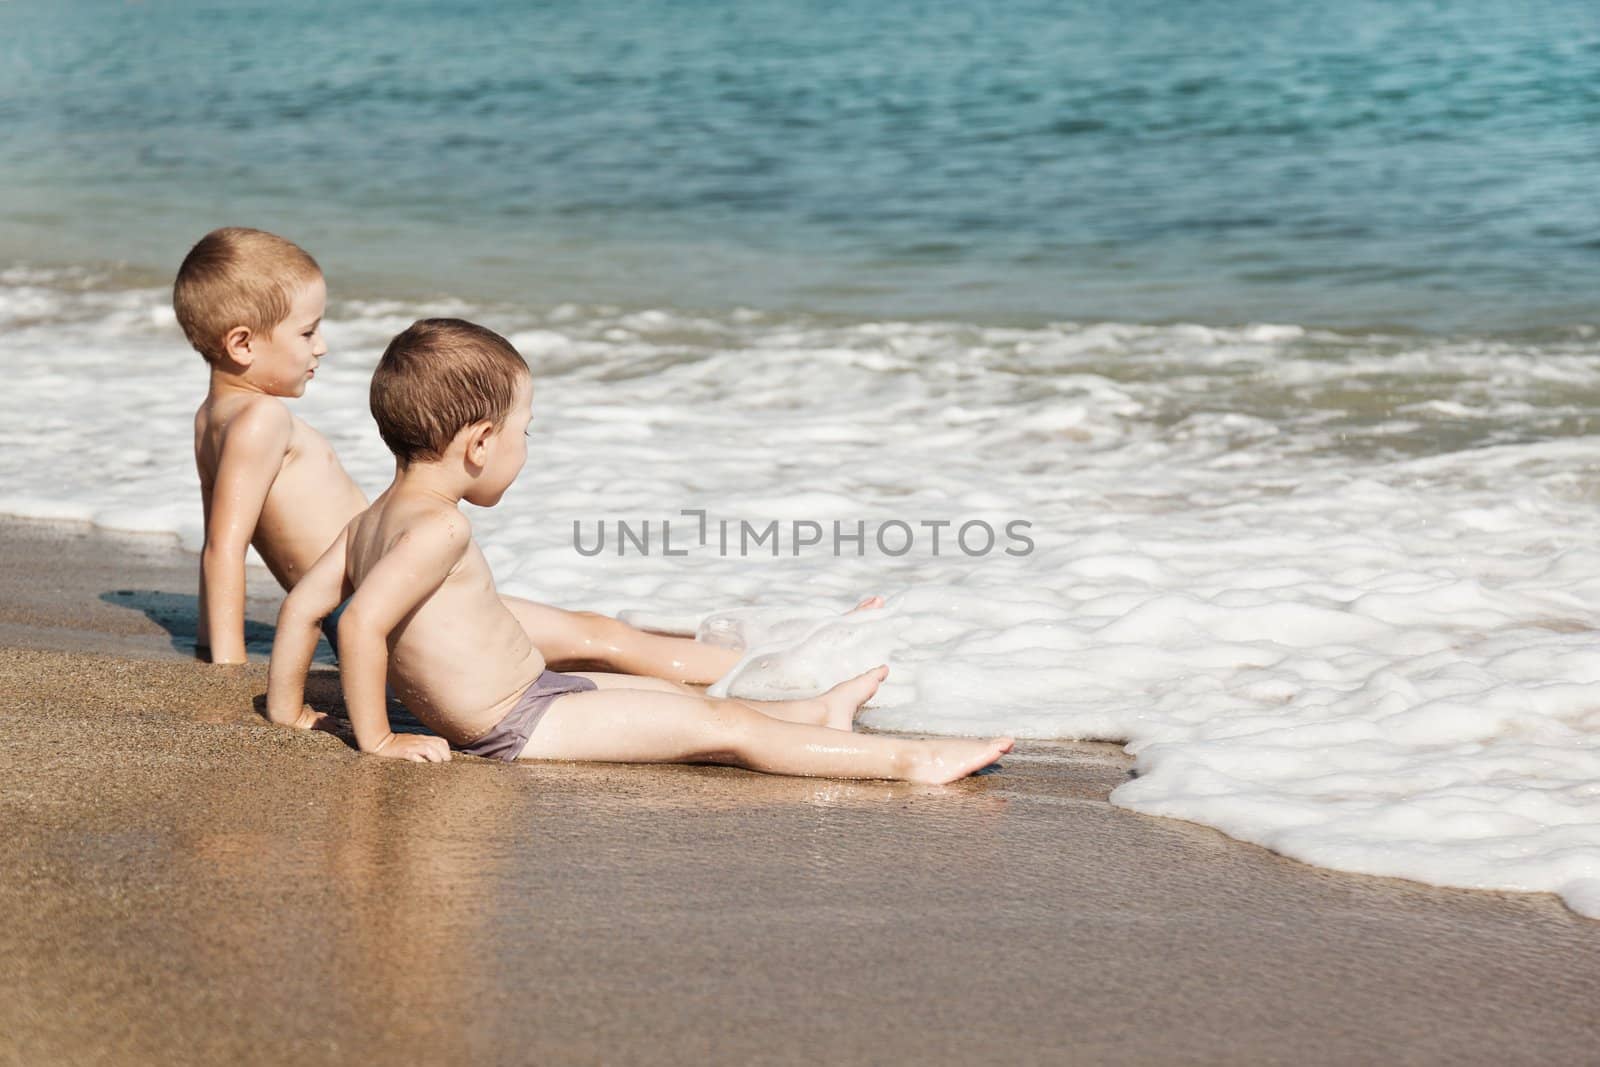 Children on sea beach by ia_64